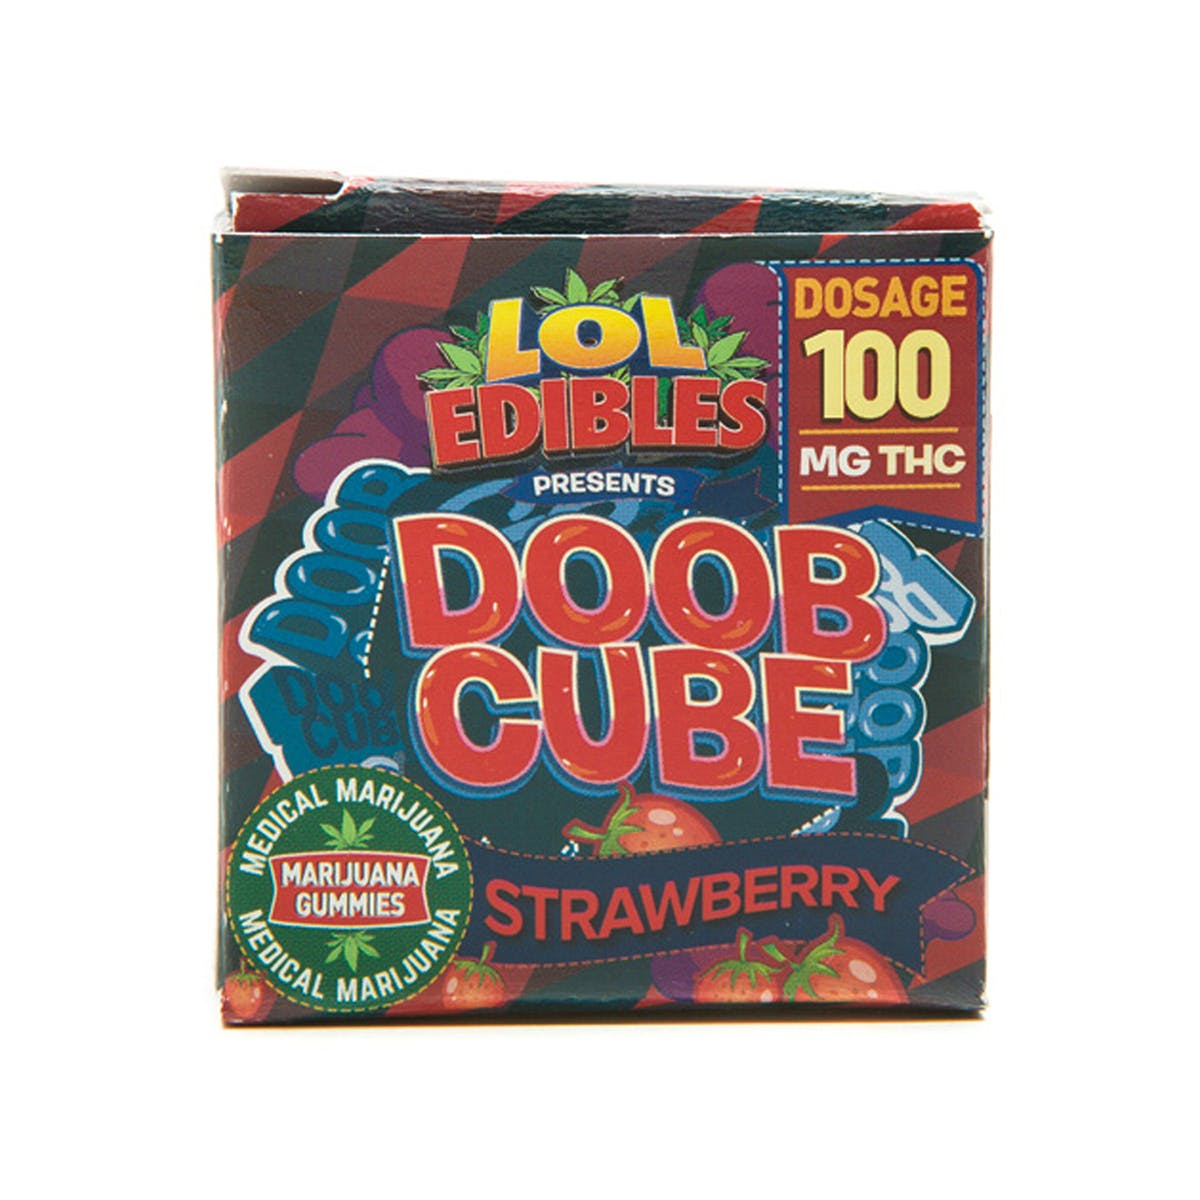 STRAWBERRY DOOB CUBE - 100MG